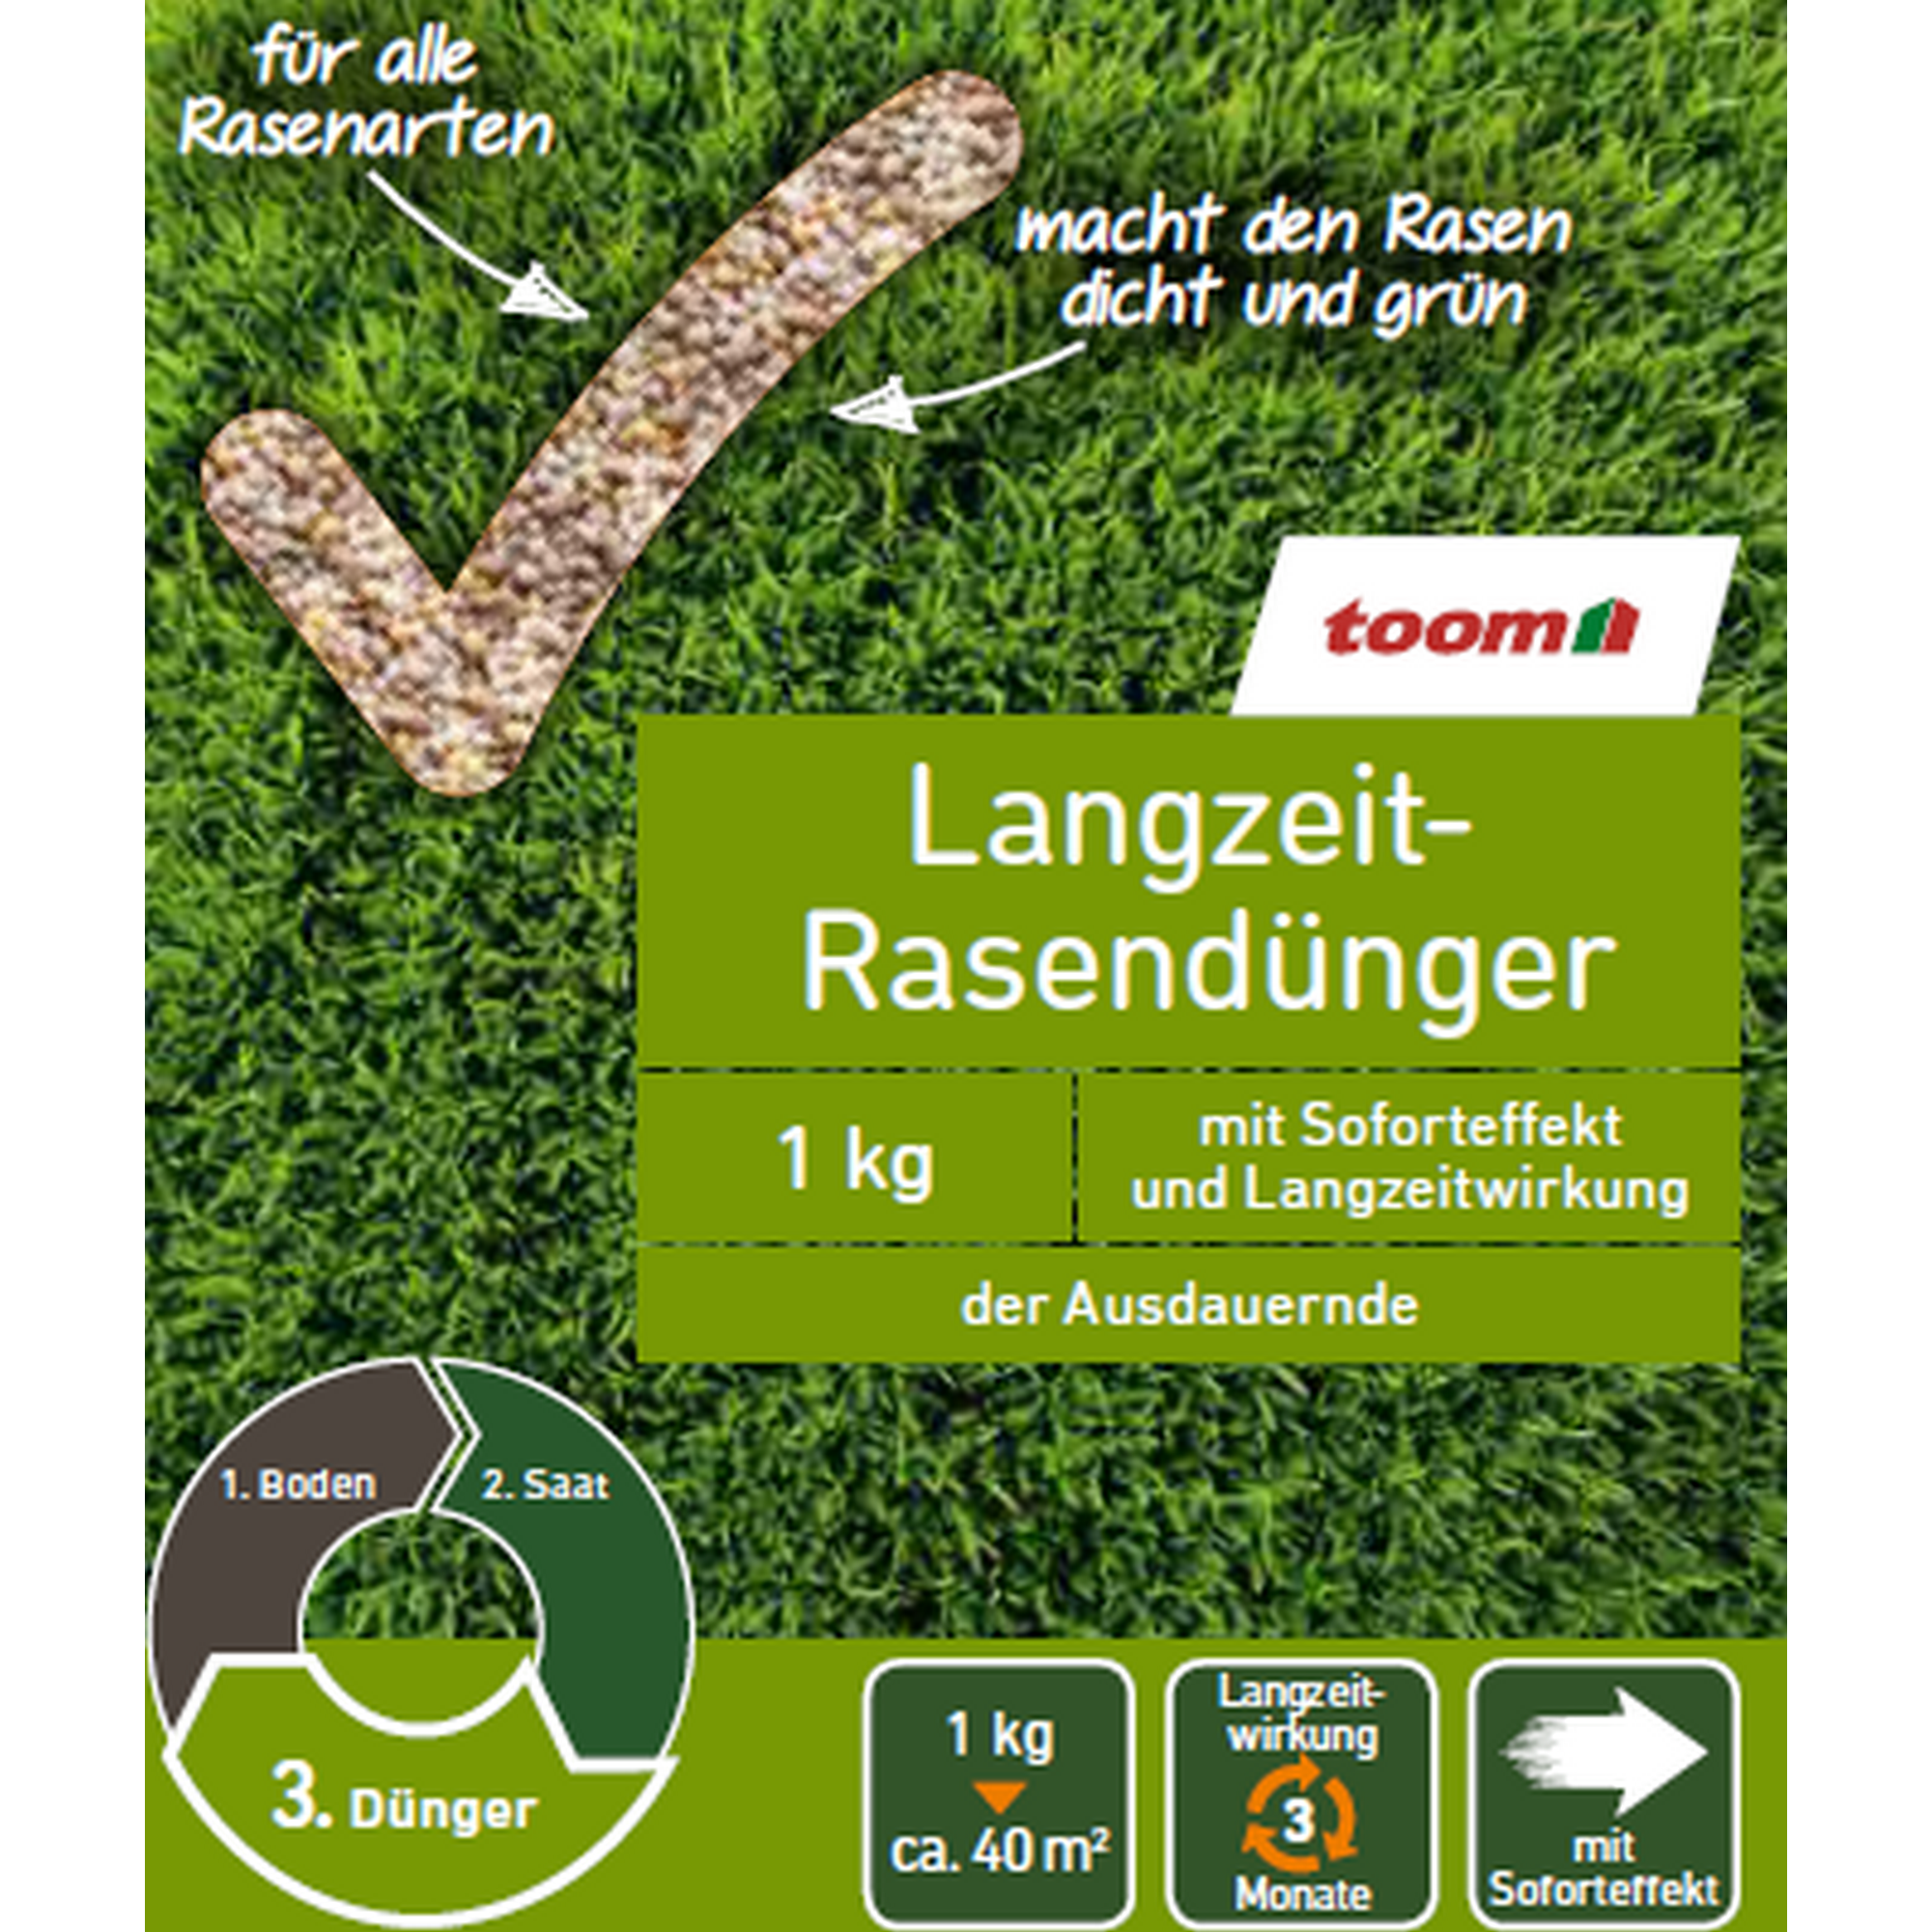 Langzeit-Rasendünger 1 kg + product picture